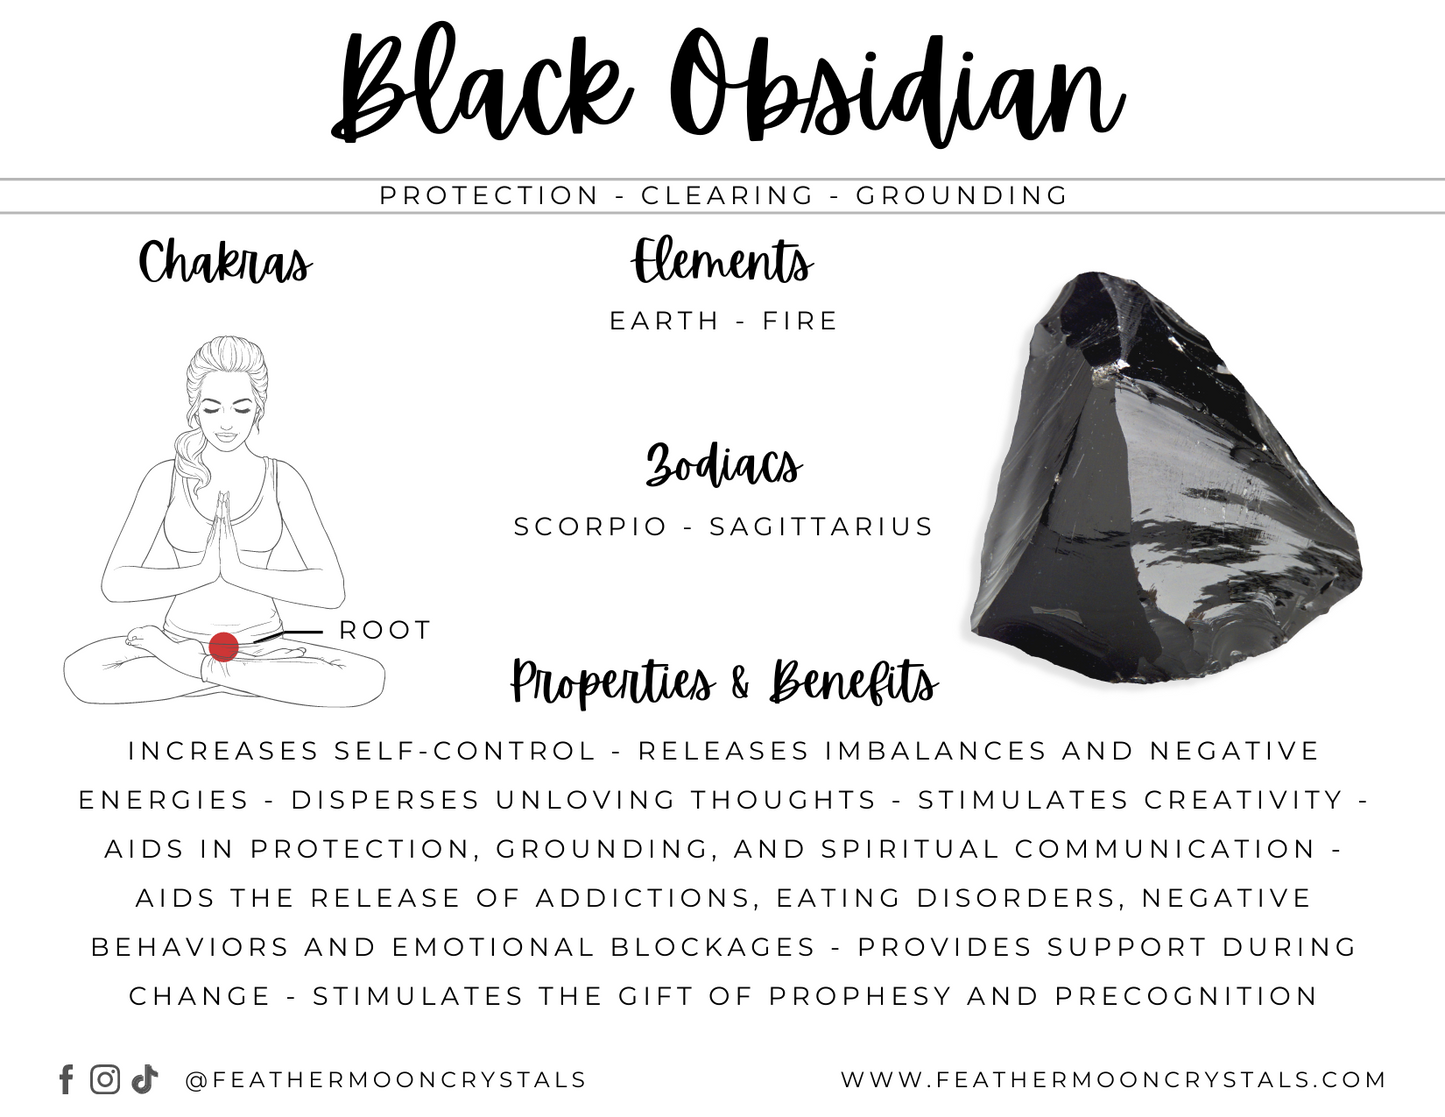 Obsidian Tumbles